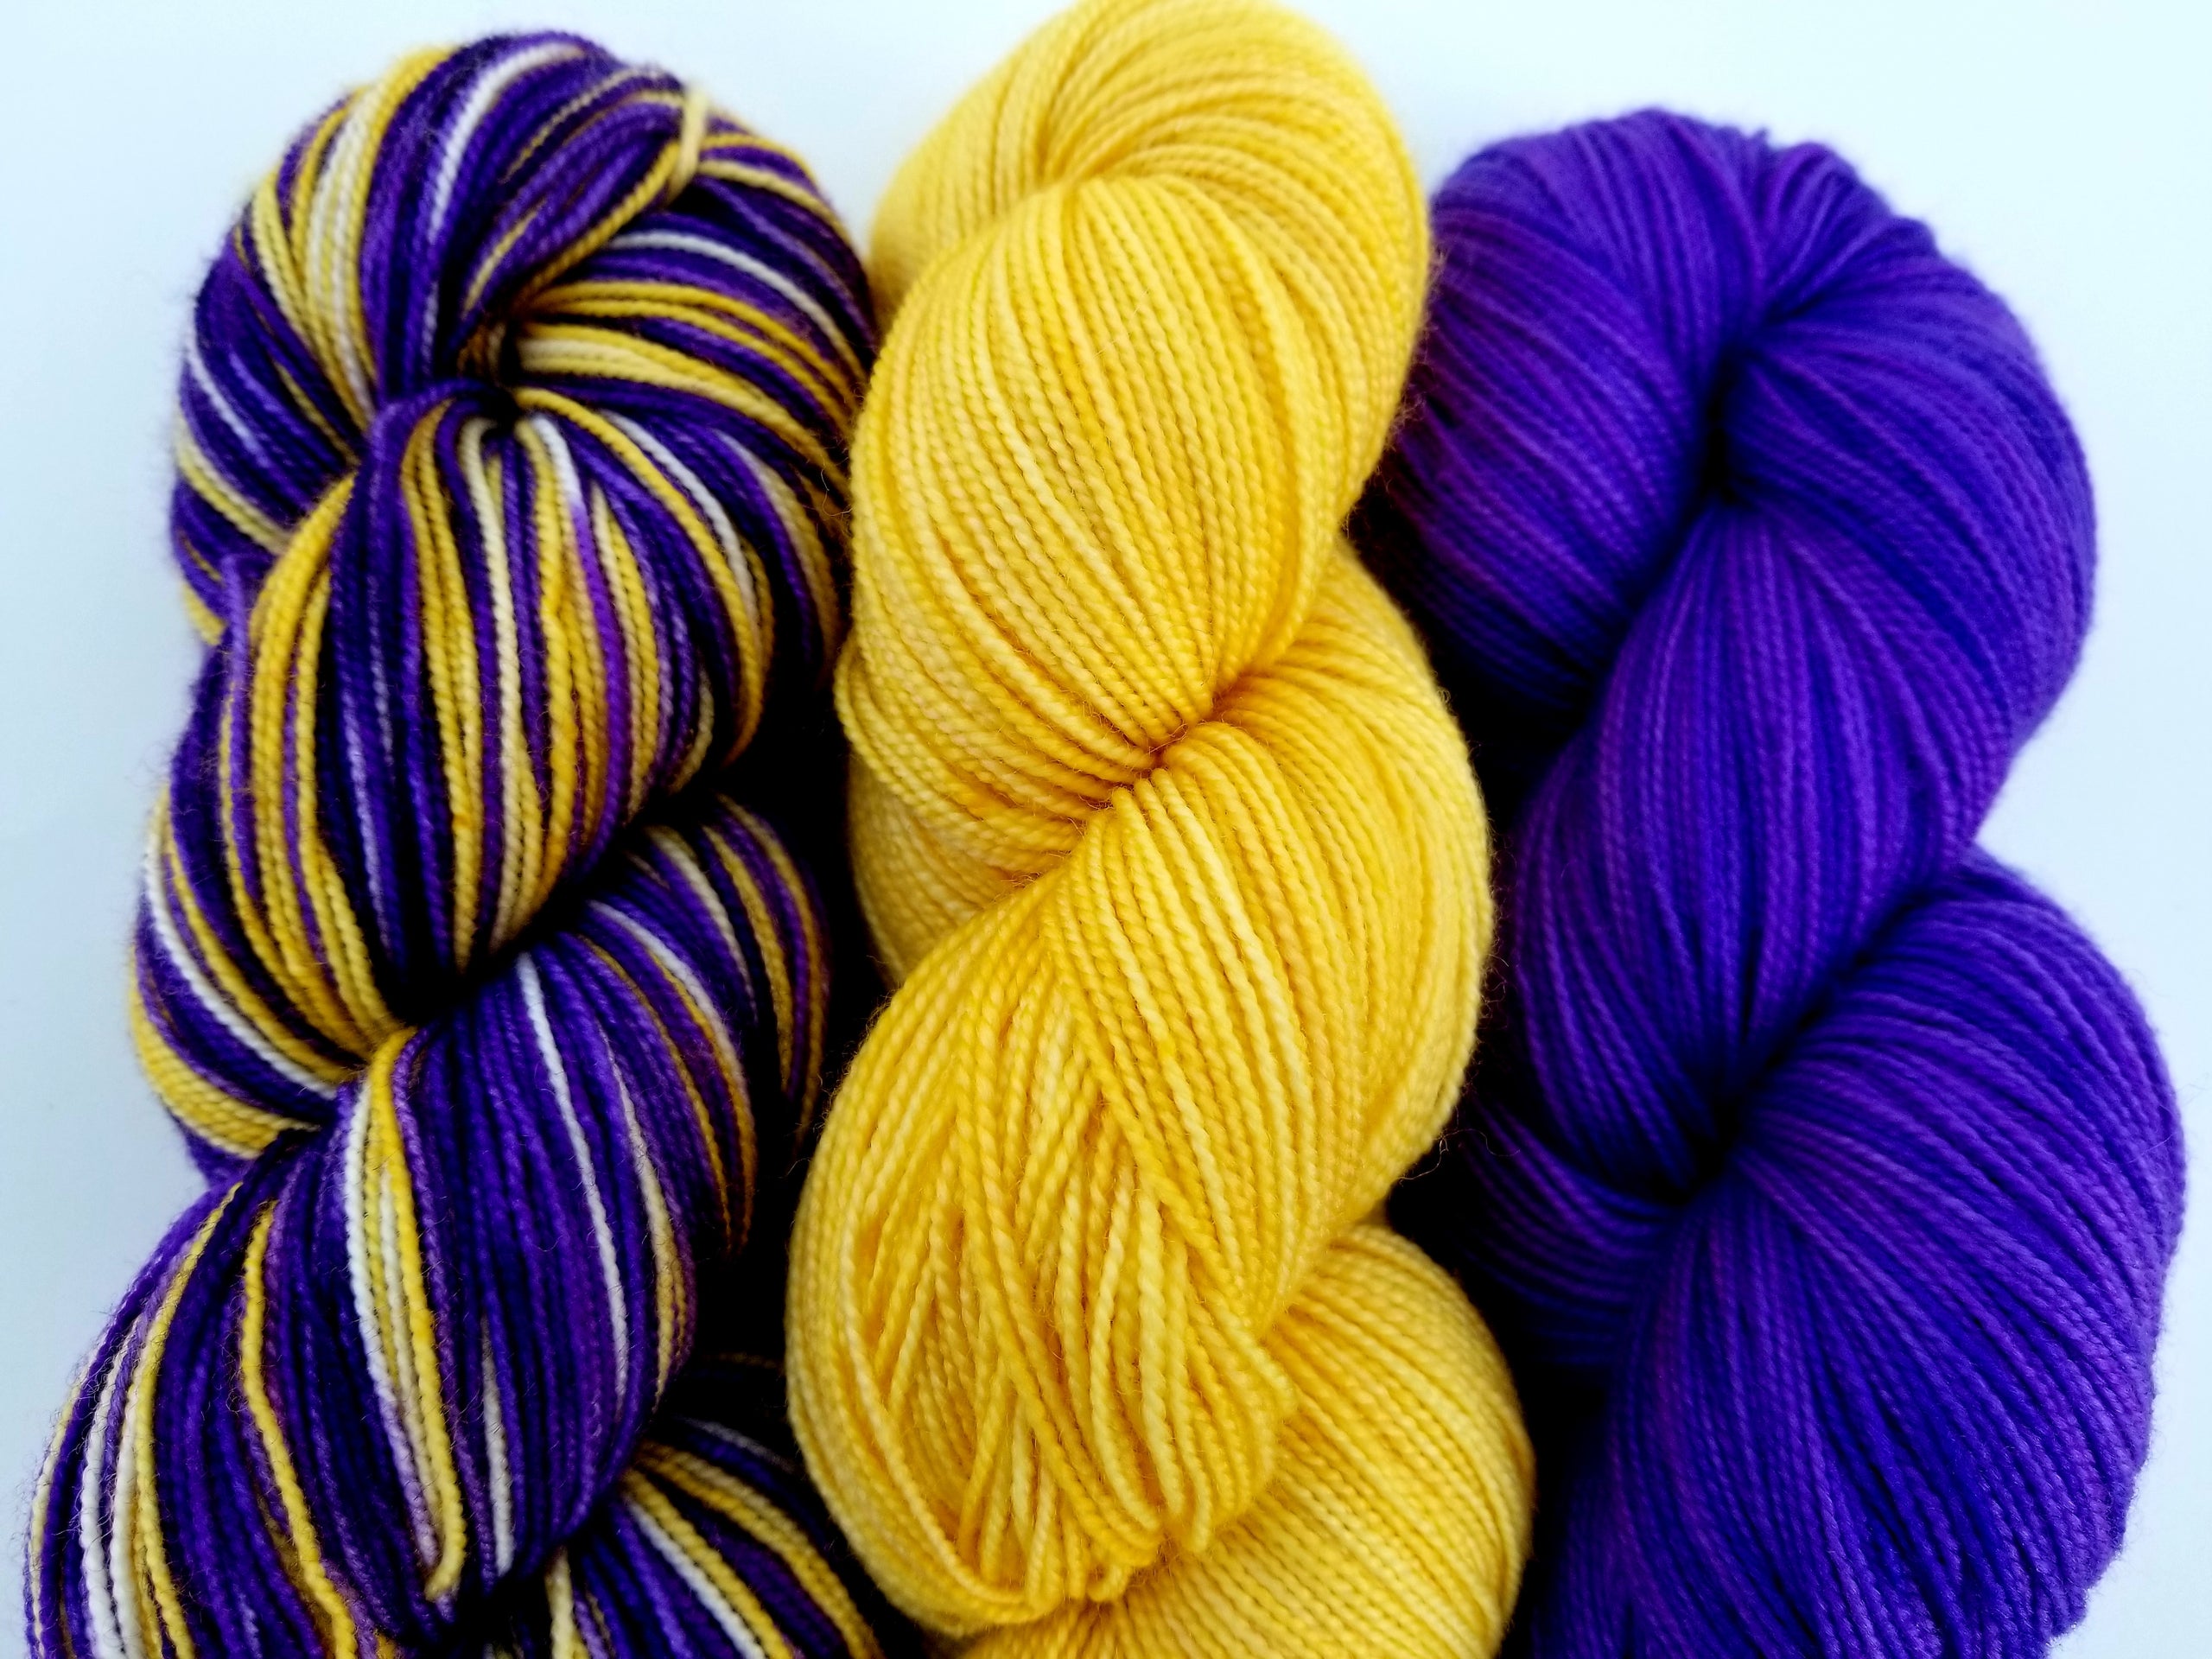 FW Machine Washable Merino Wool: UW aka Purple and Gold 3 skein set